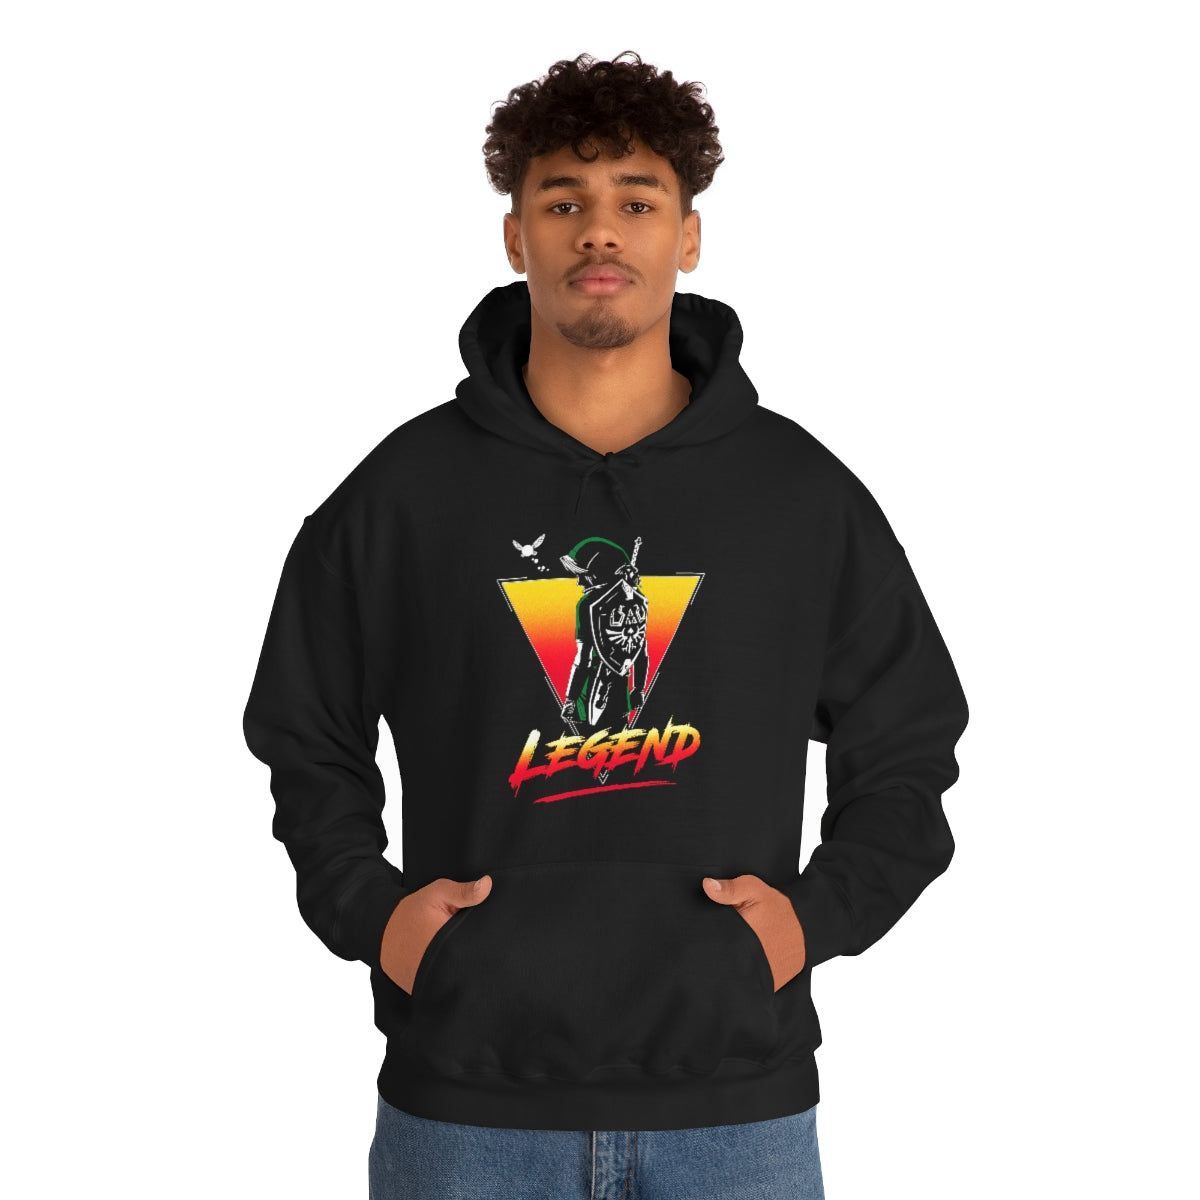 Legend of Link Hooded Sweatshirt